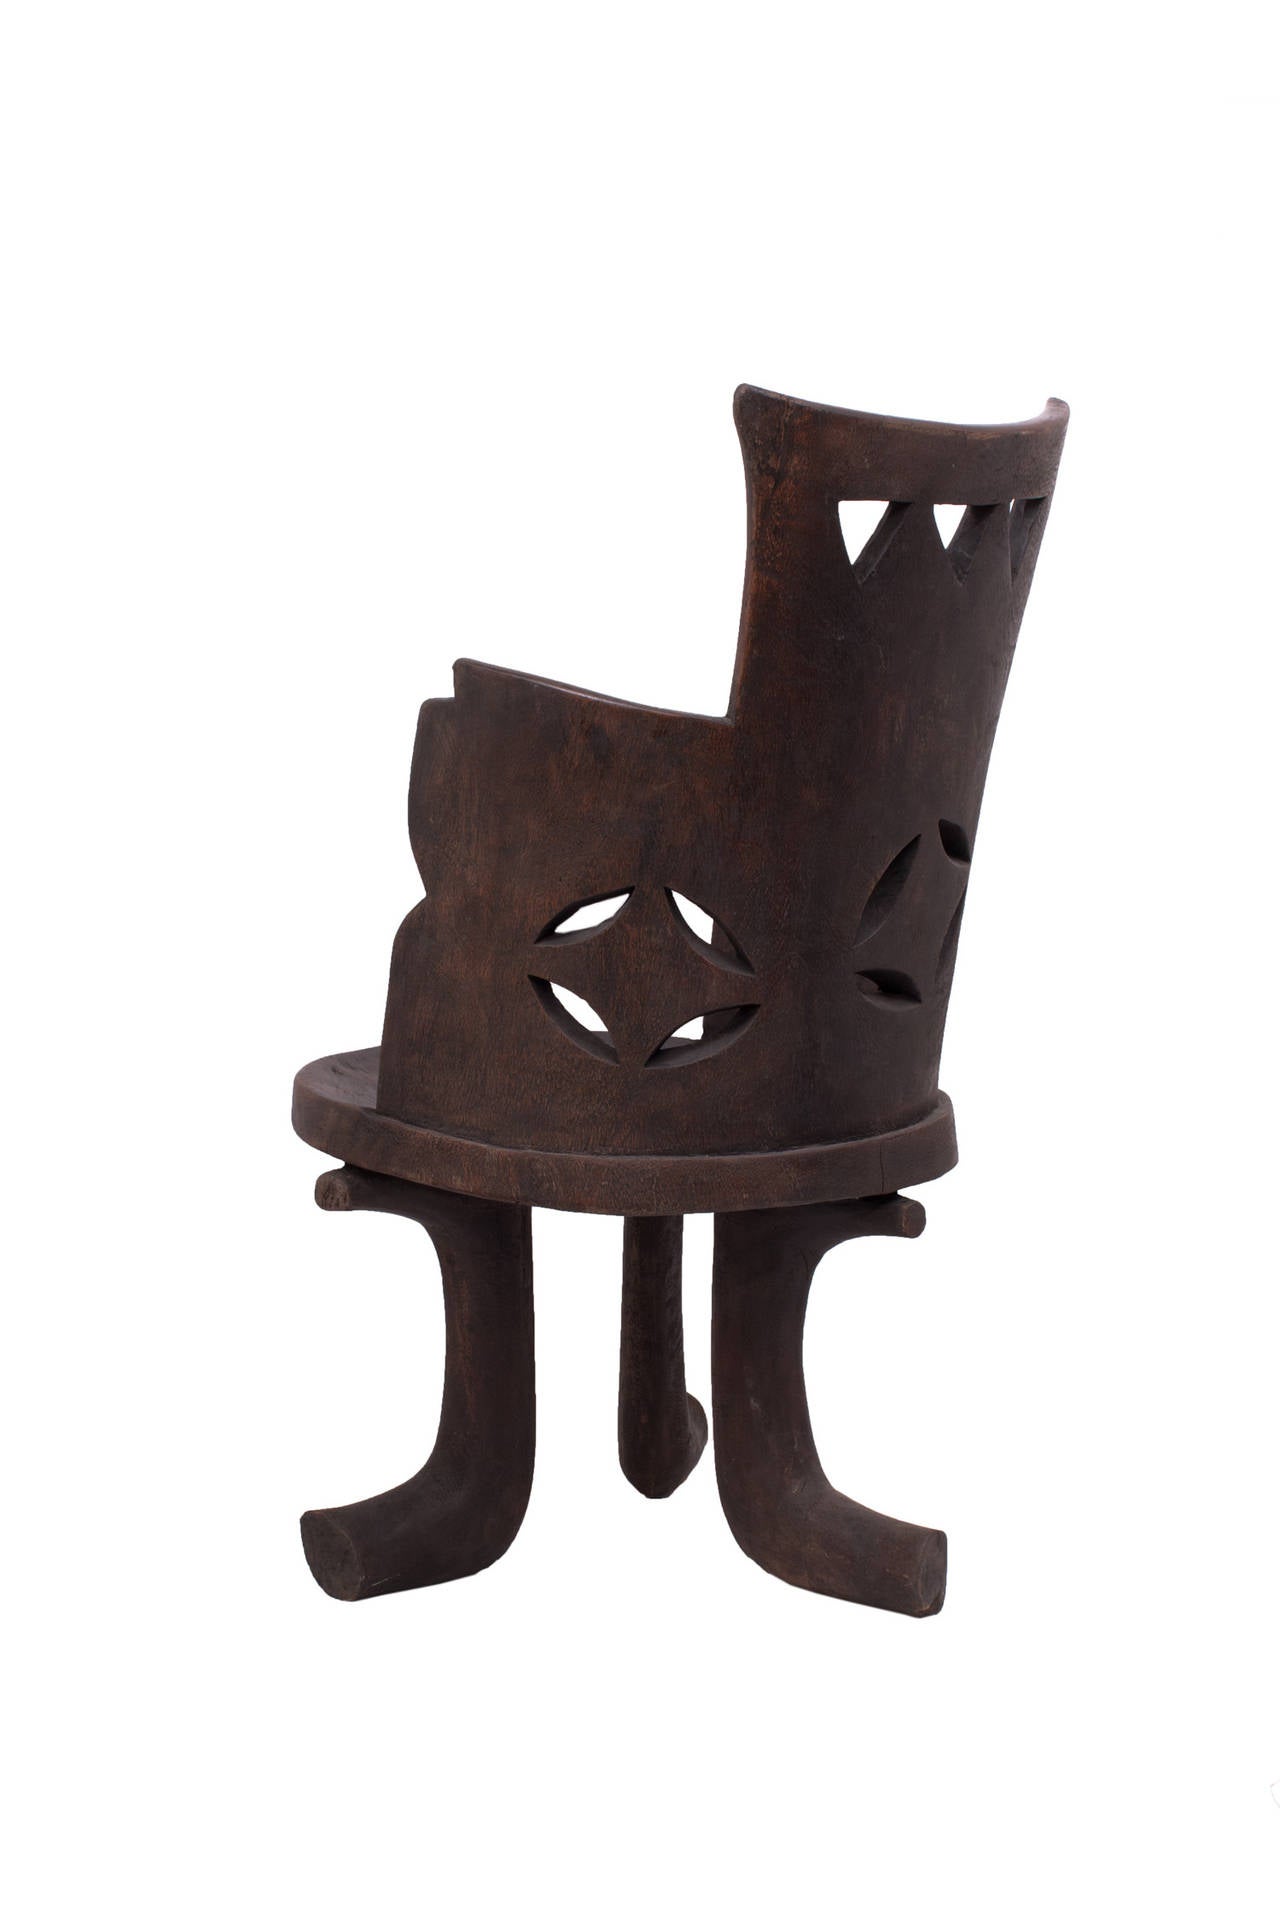 Tribal Traditional Ethiopian Wood Chair